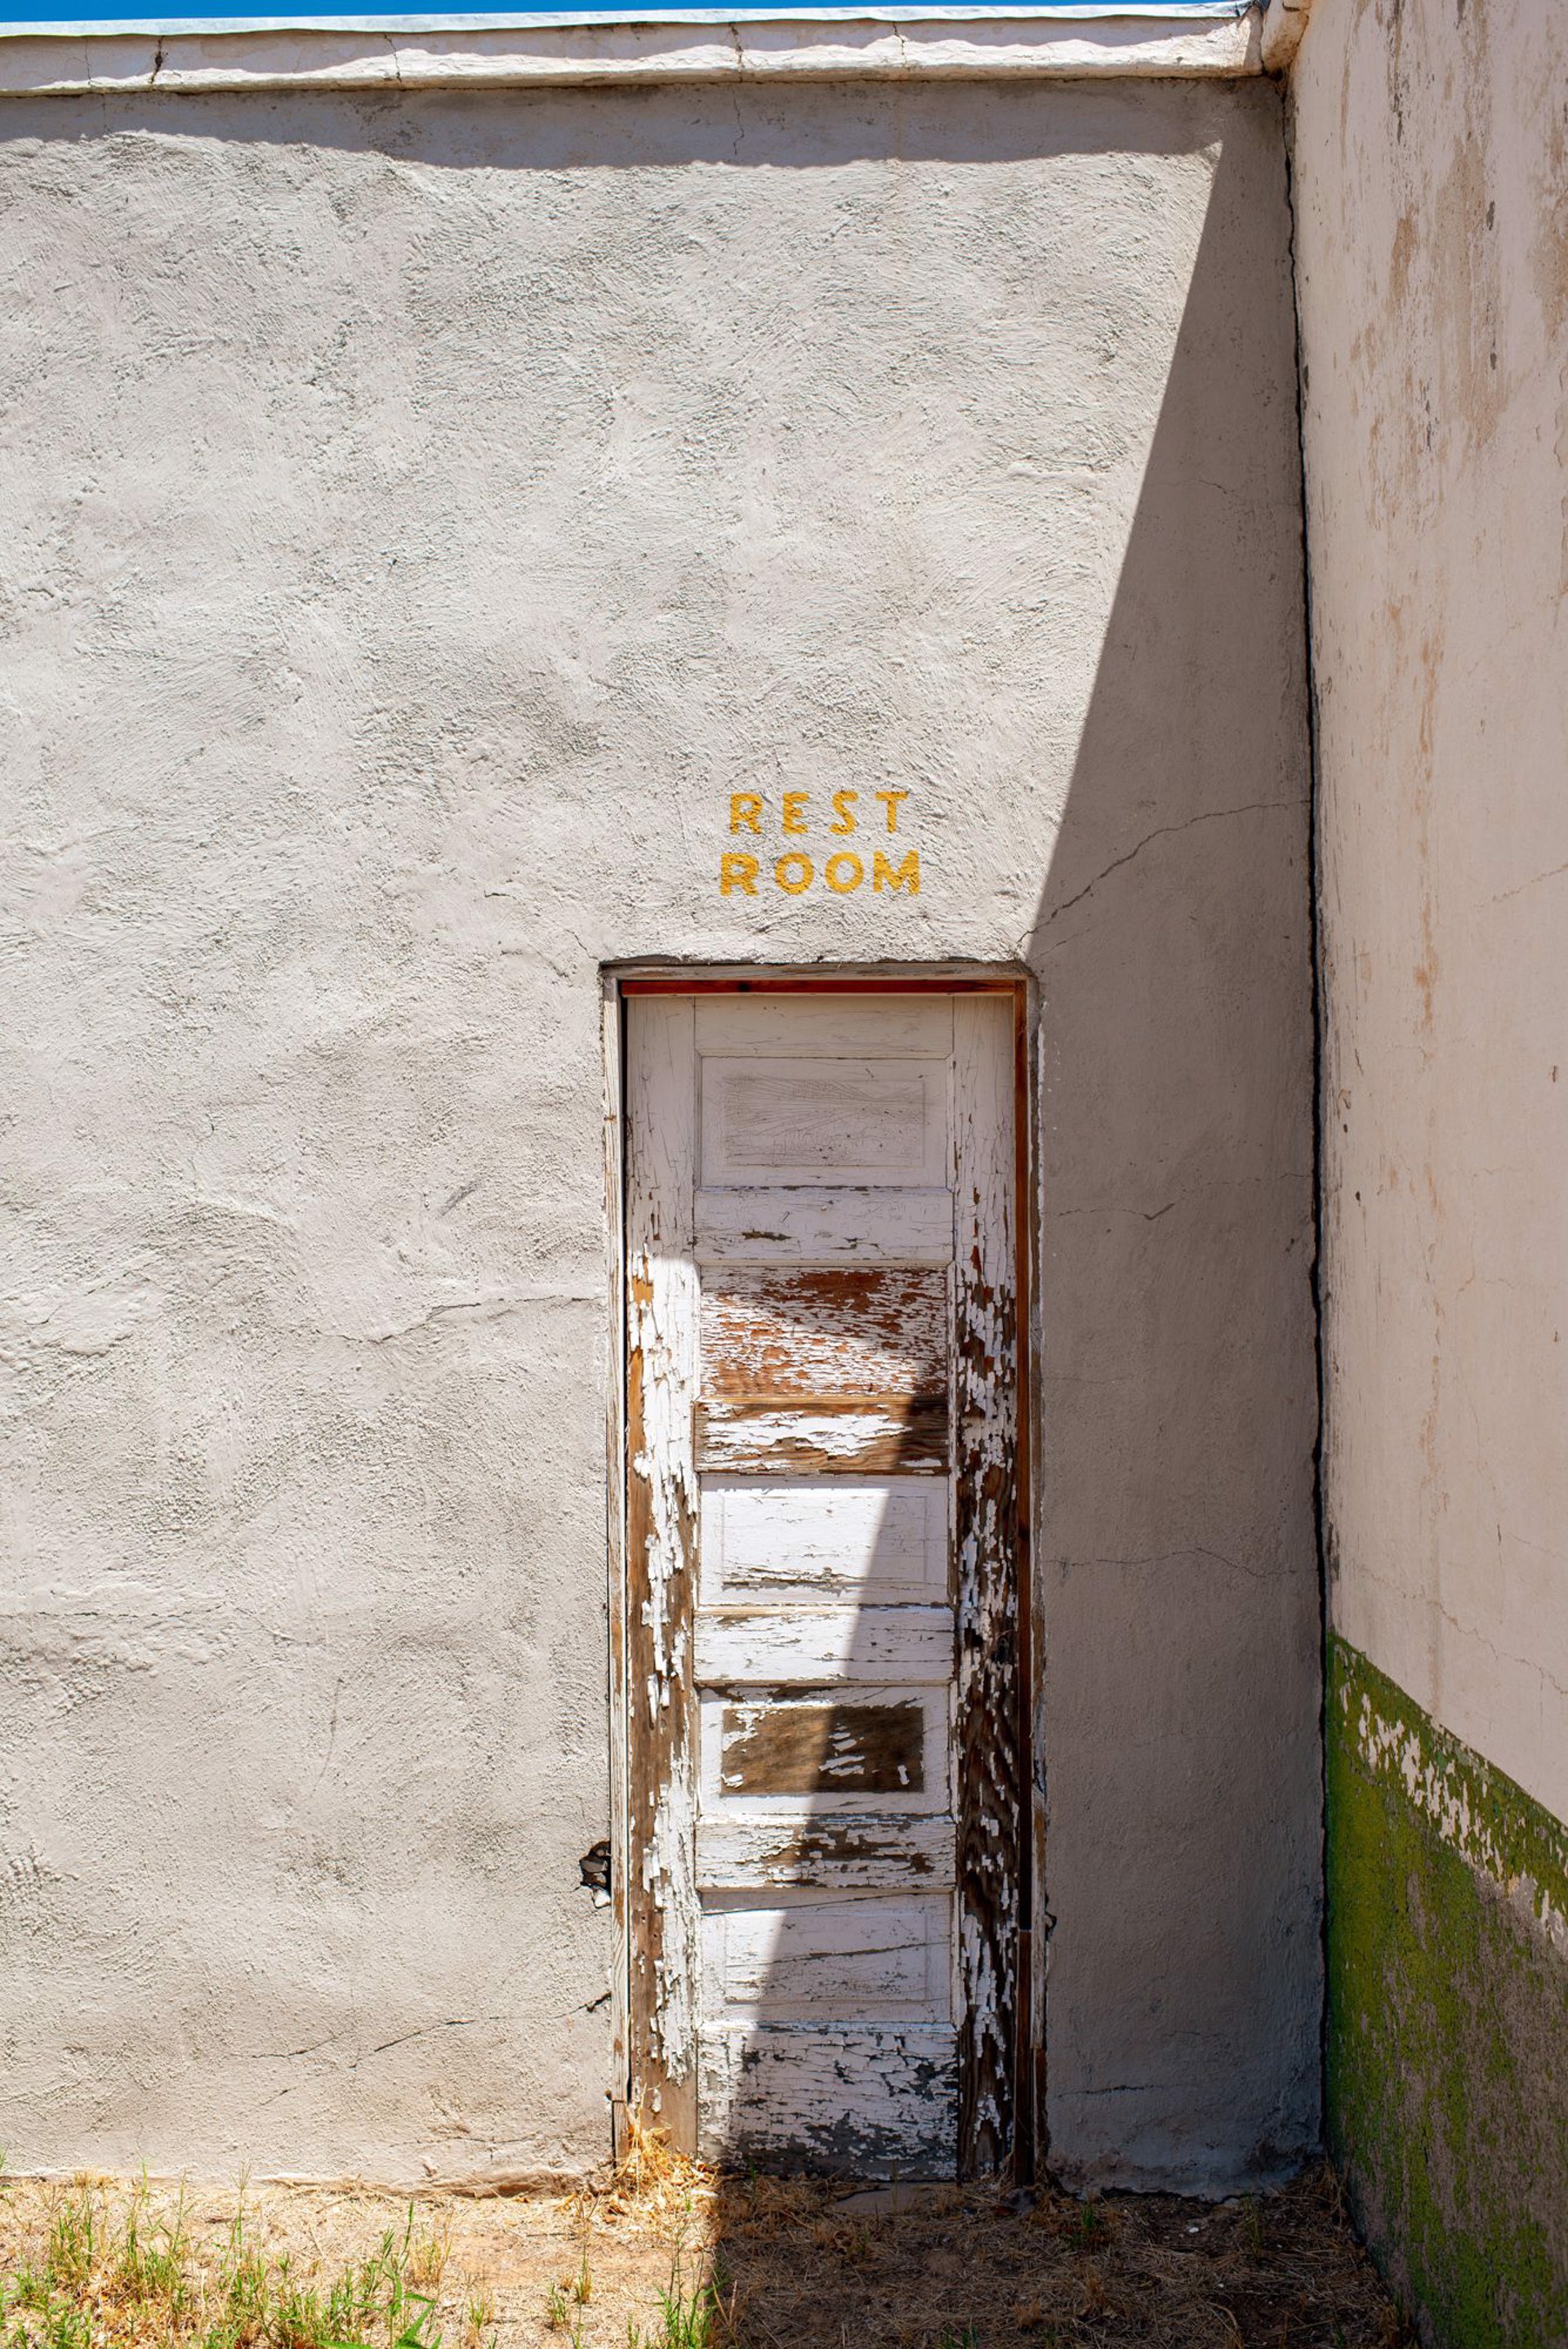 Portfolio Framed: Marfa Rest Room by Thom Jackson